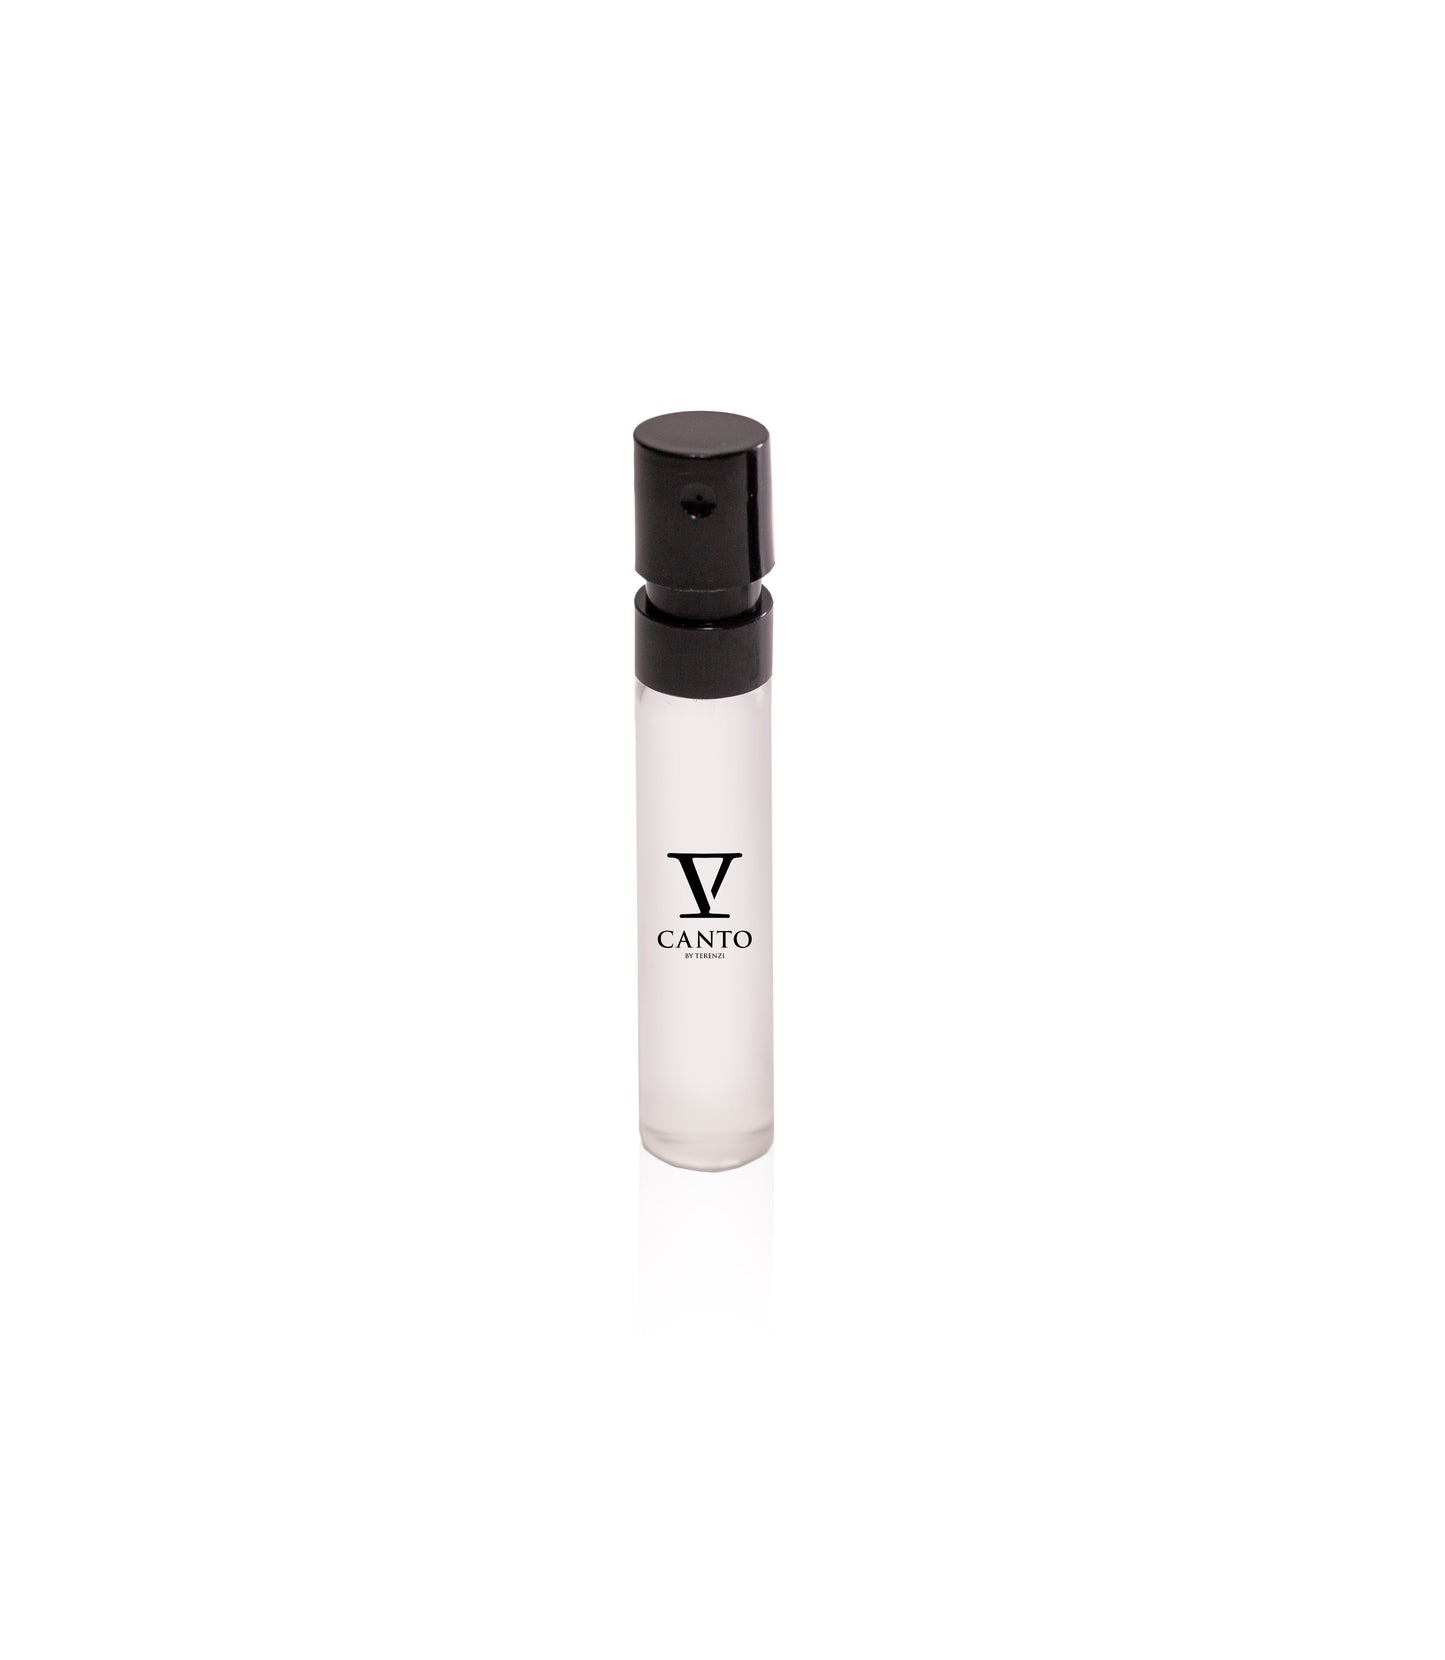 CIANURO 1.5ml Sample Vial - Extrait de Parfum